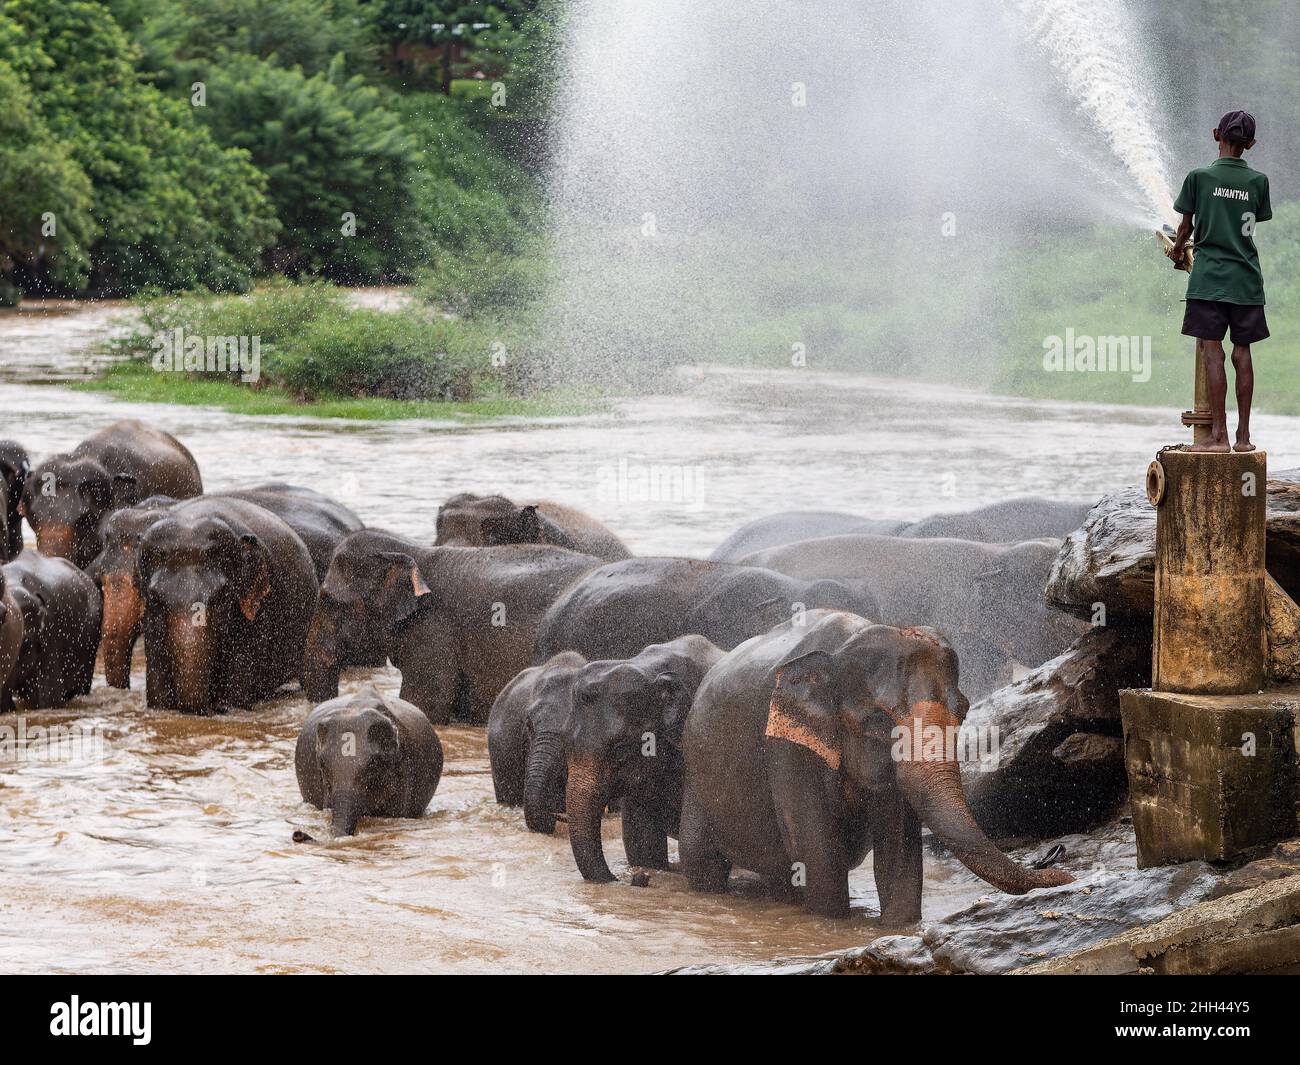 Elephants getting a shower at Maha Oya River in Pinnawala, Sri Lanka Stock Photo